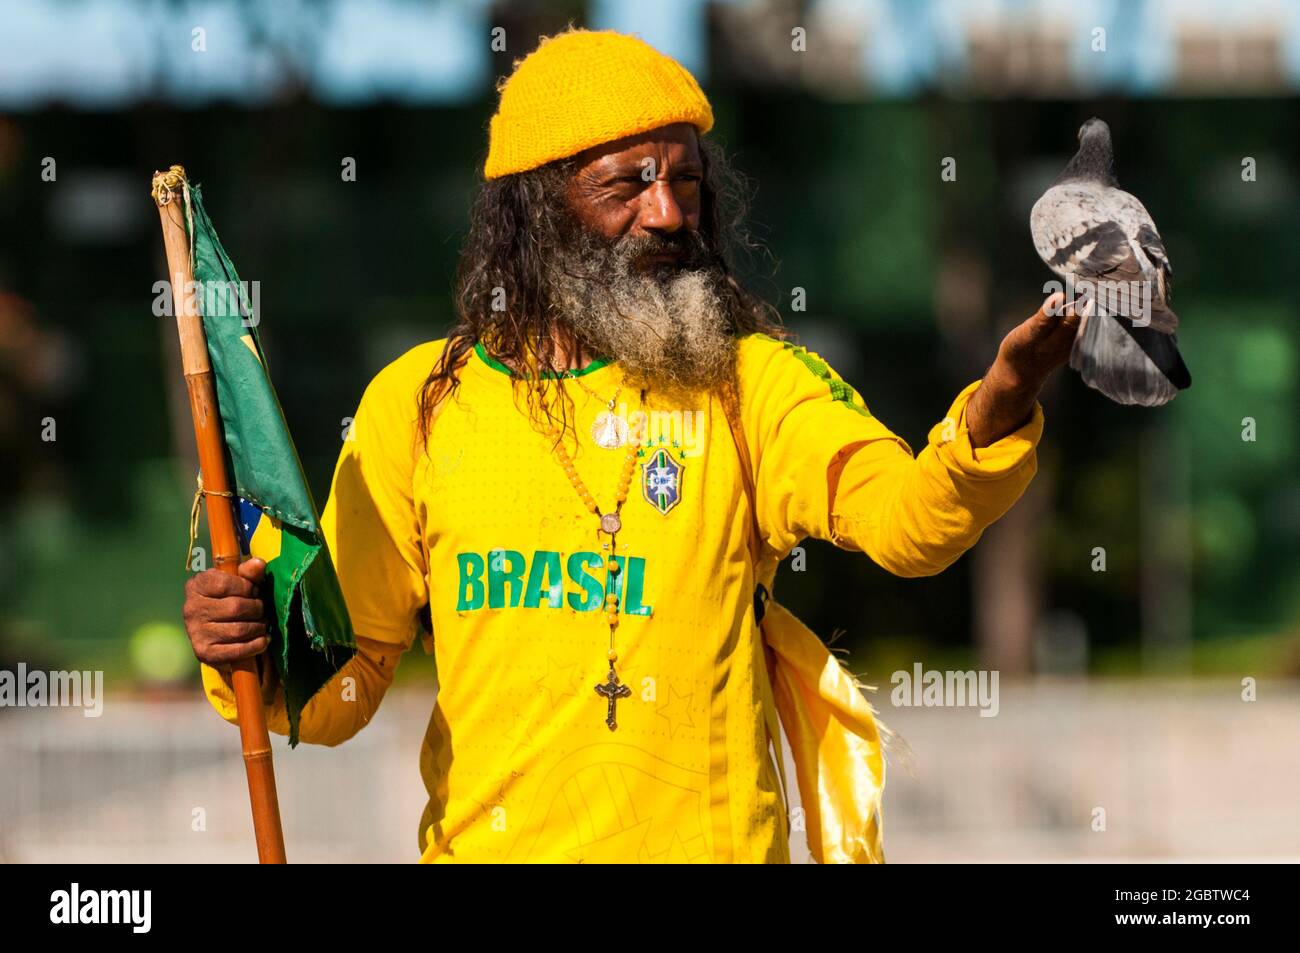 Un uomo brasiliano con la barba pone. Brasilia, Brasile Foto Stock